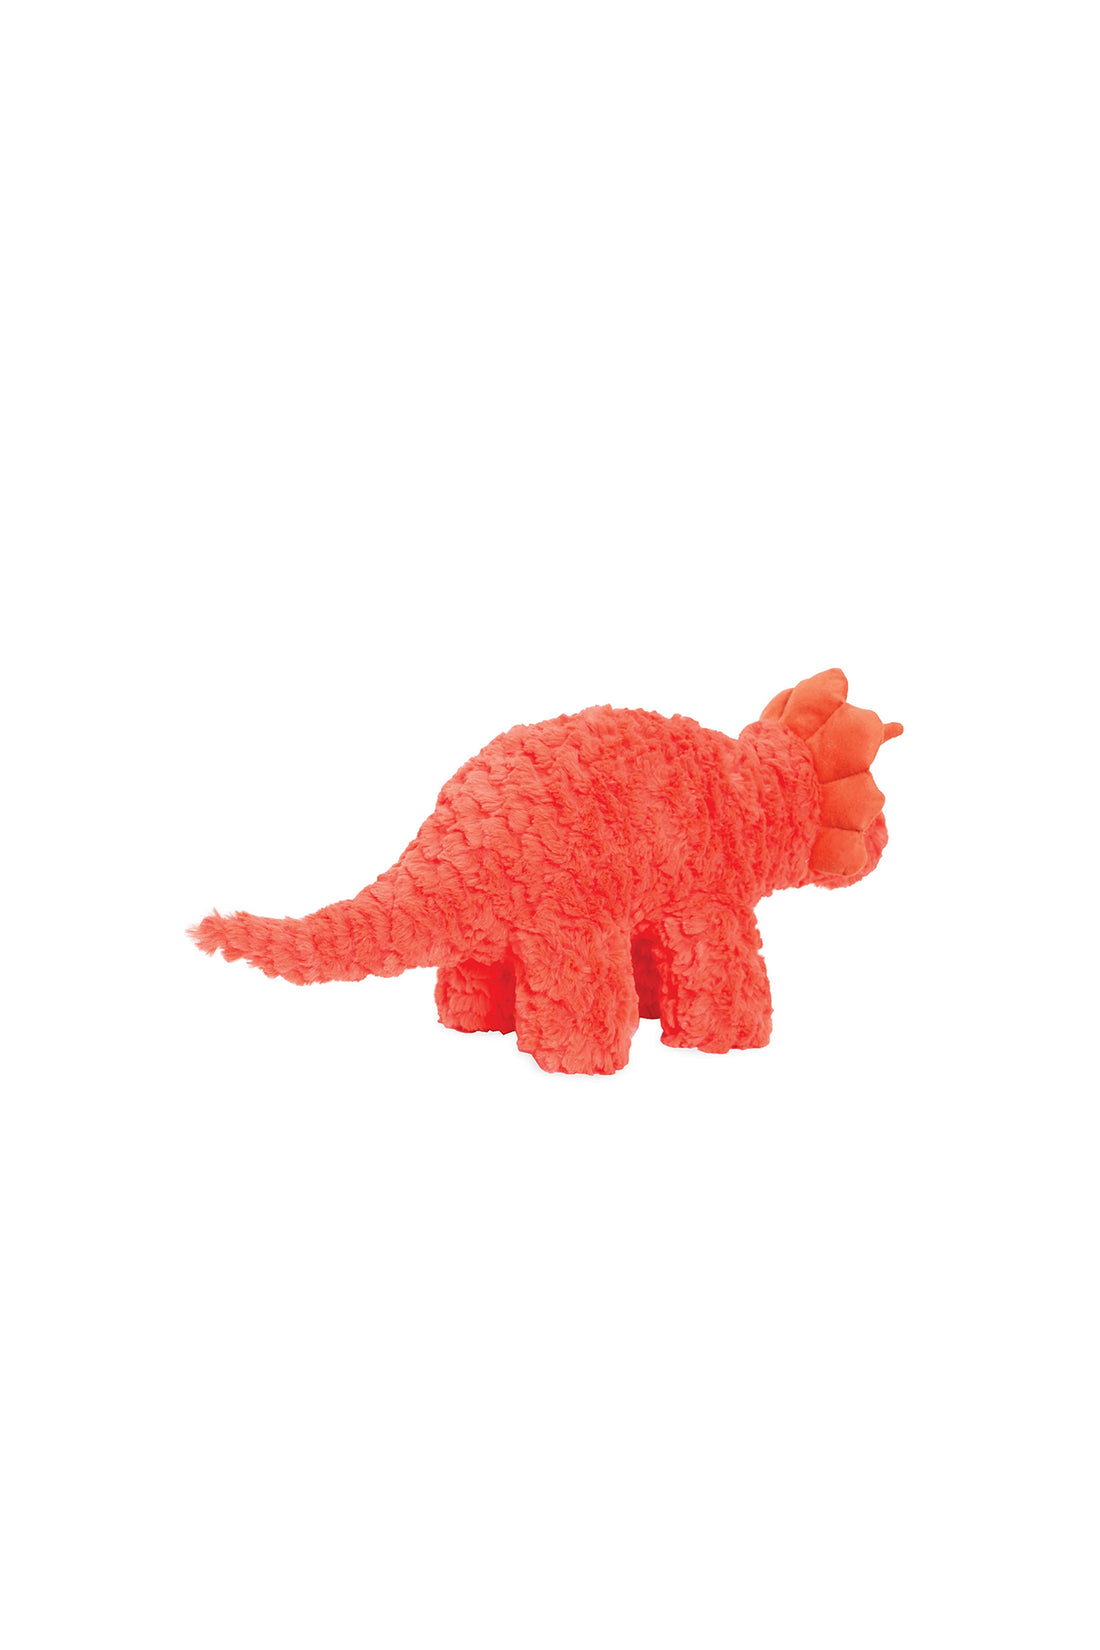 Manhattan Toy Little Jurassics Rory - Triceratops - Sea Apple